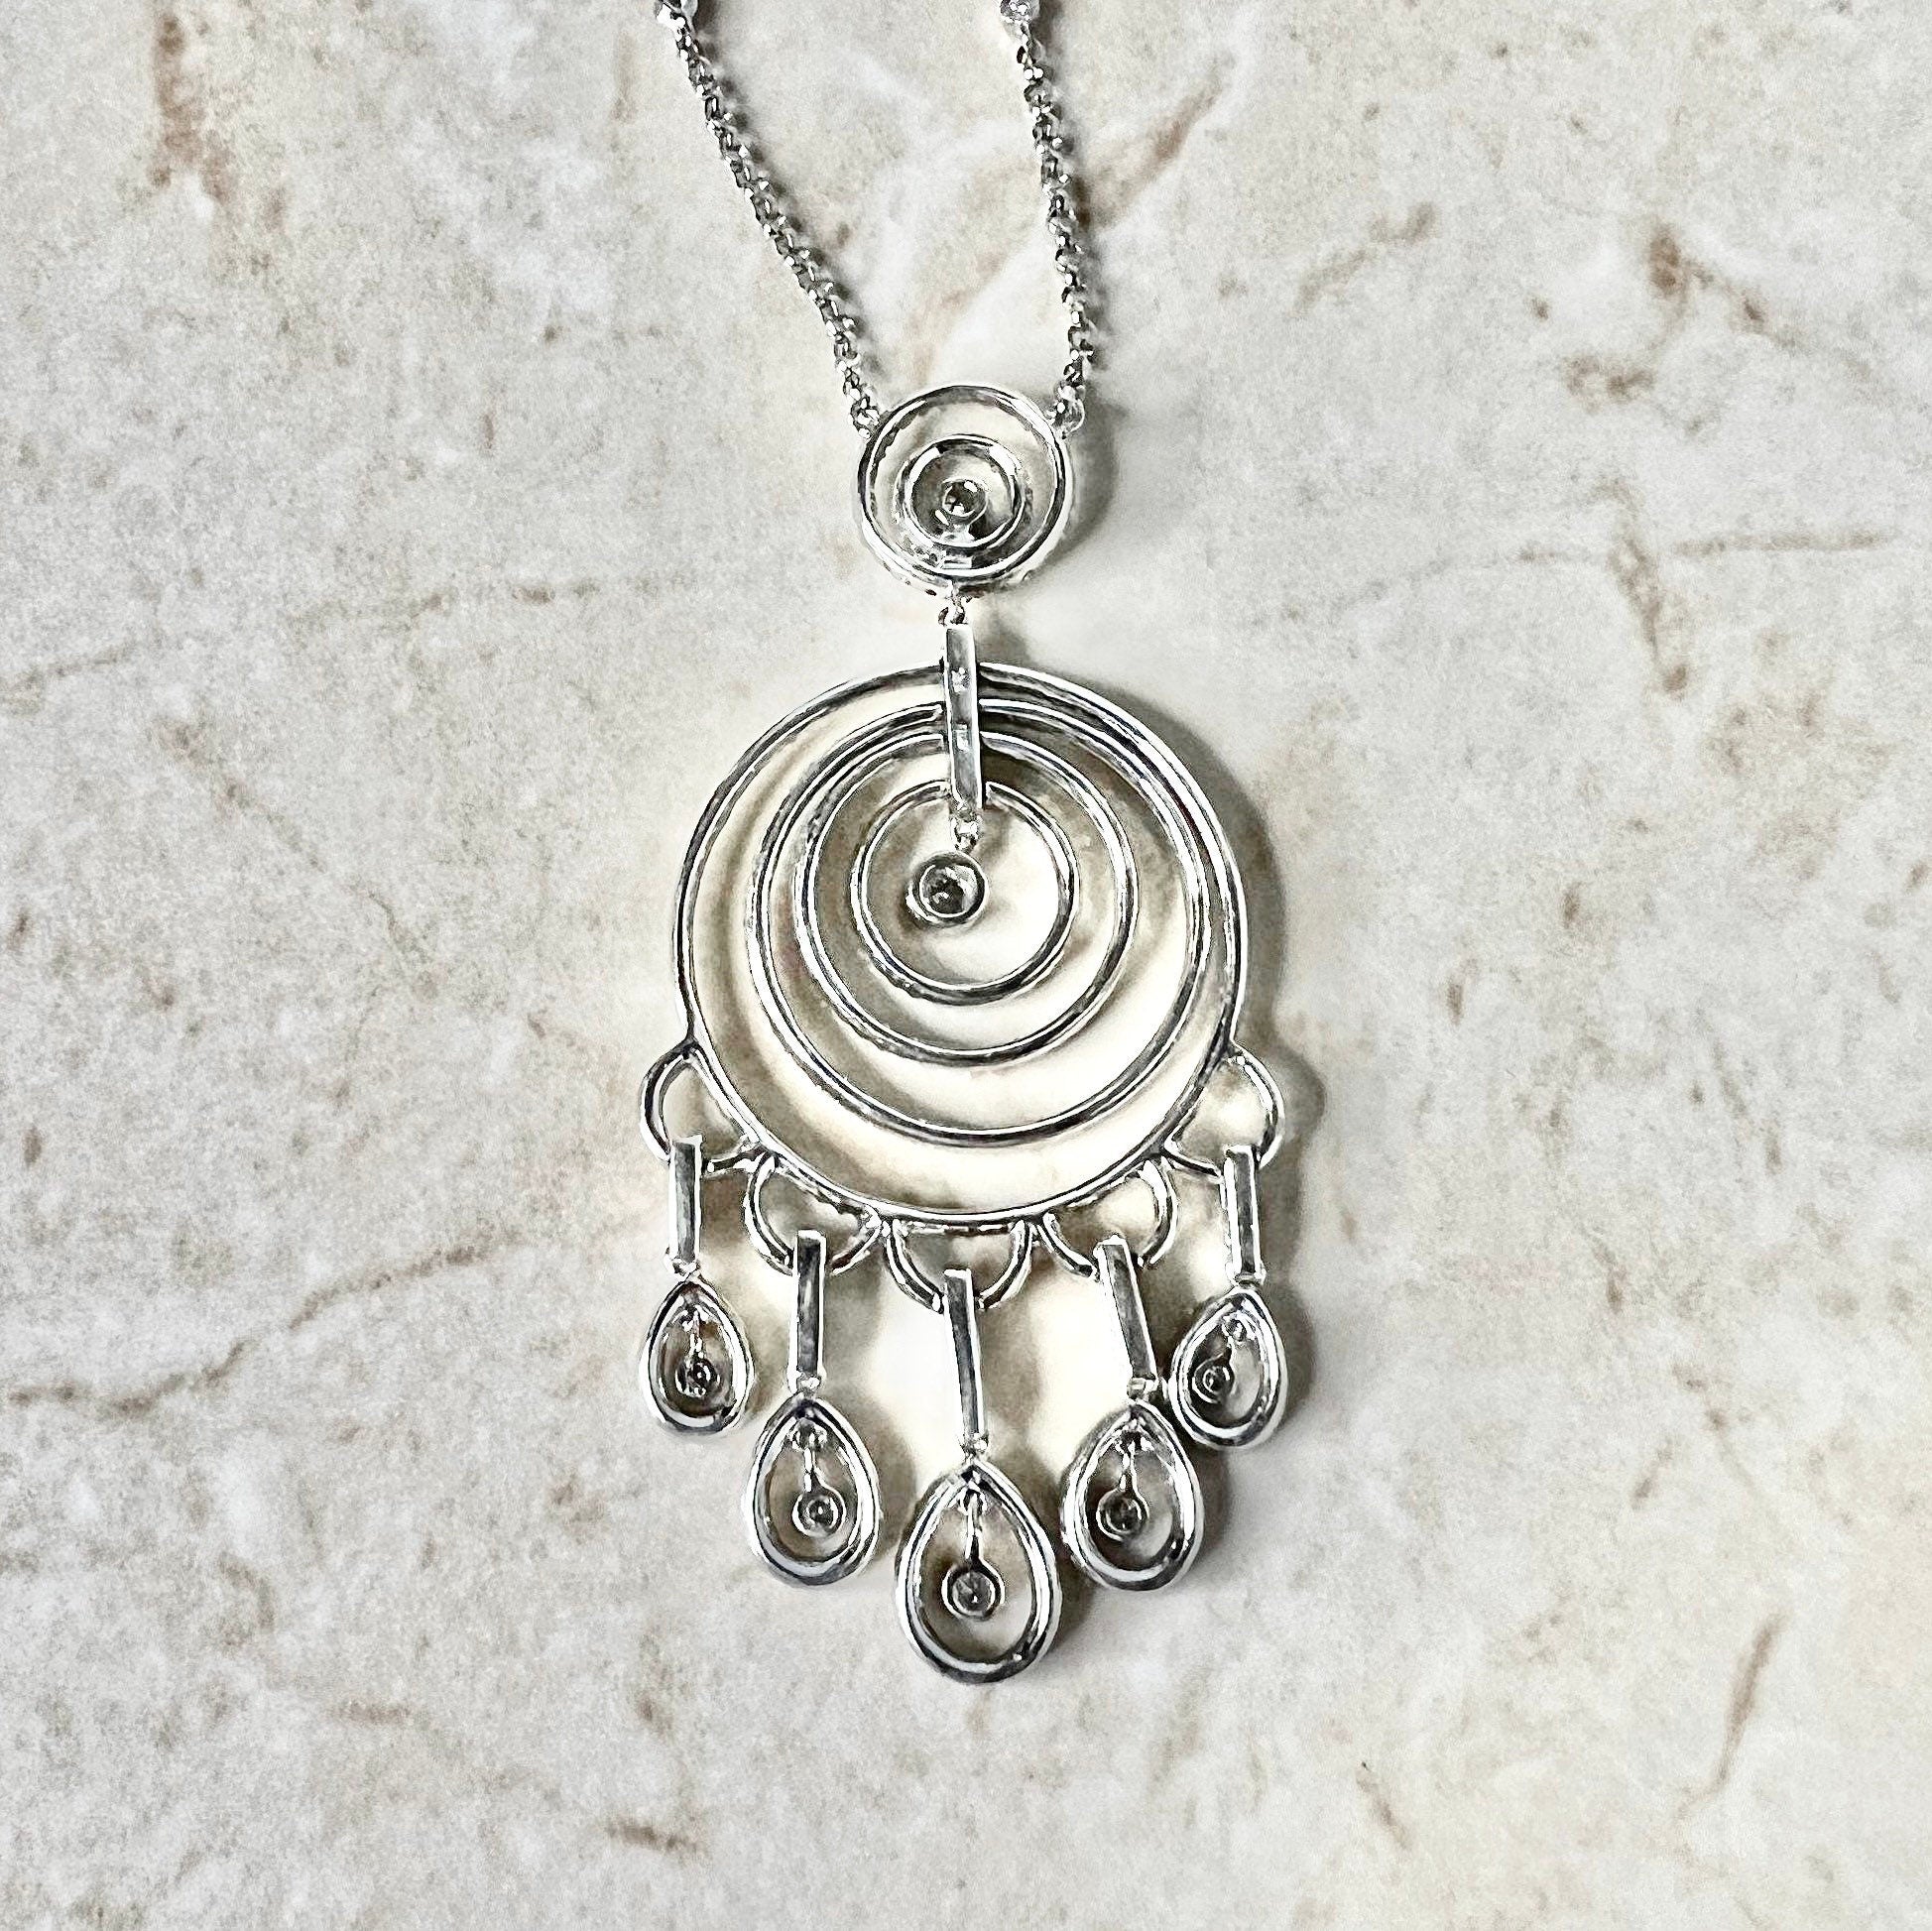 Moonstone large pendant necklace for women 65 mm -Moonlit